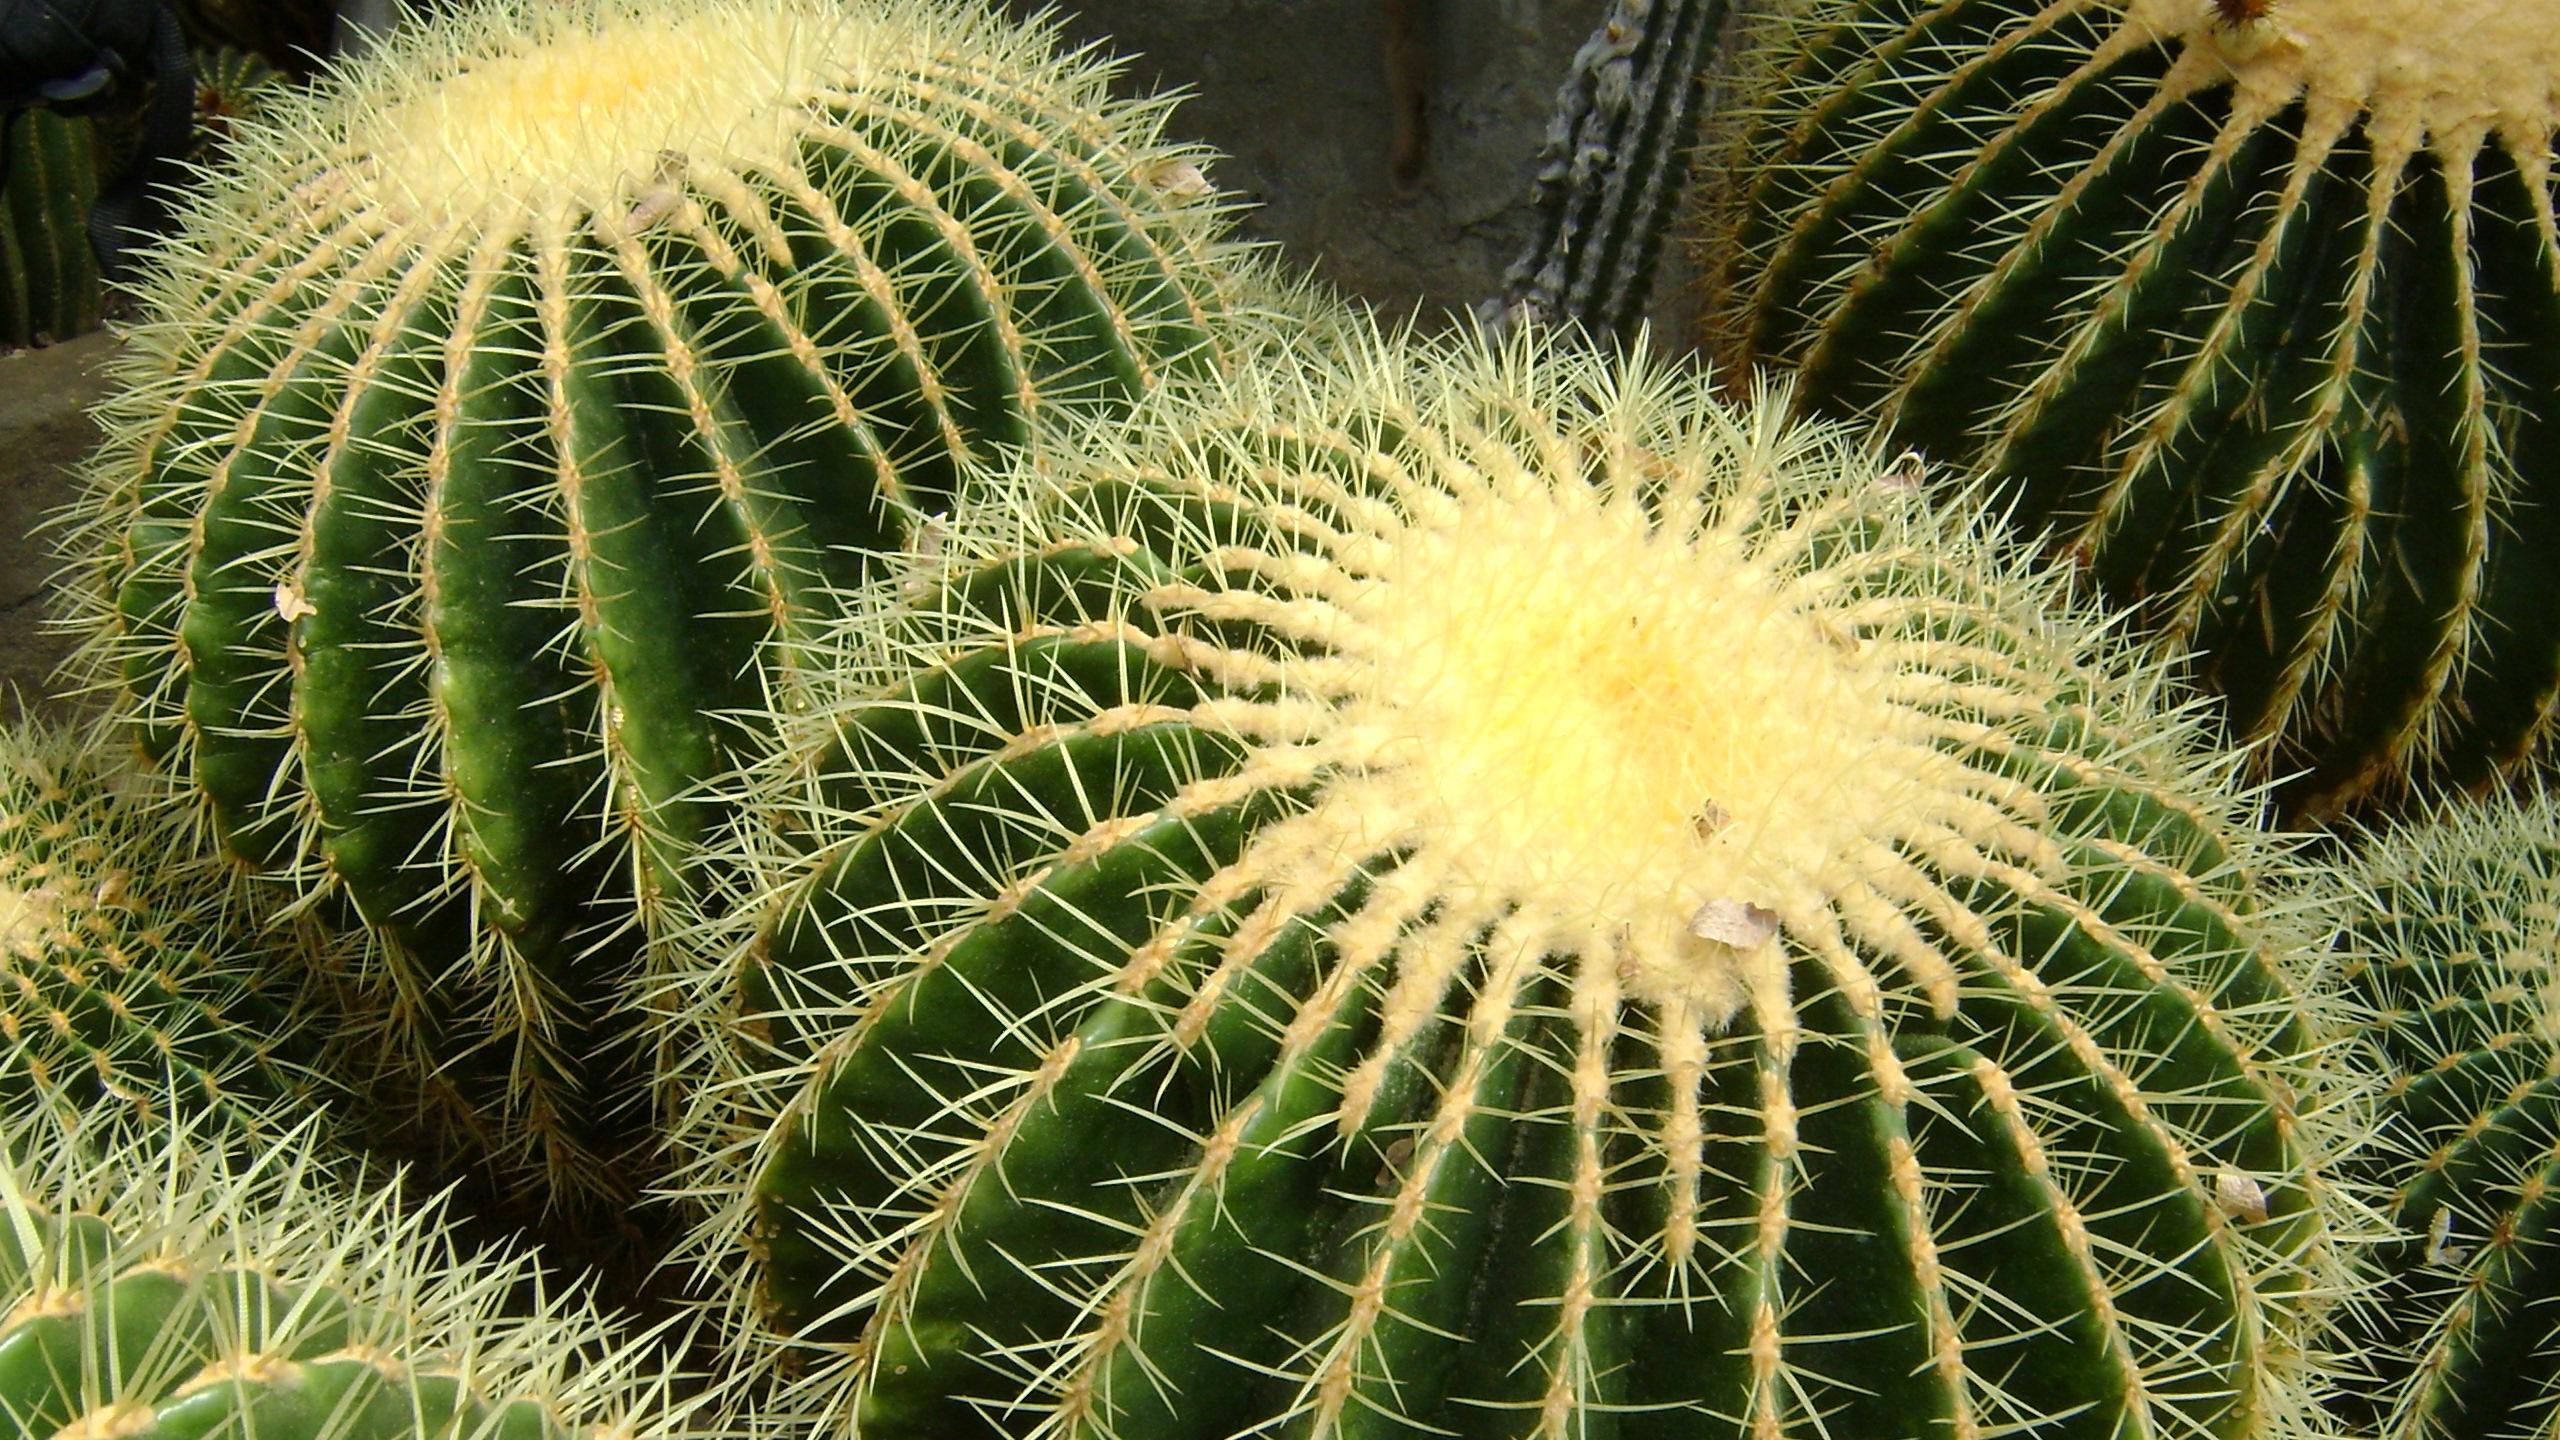 Hd Images Of Cactus - HD Wallpaper 